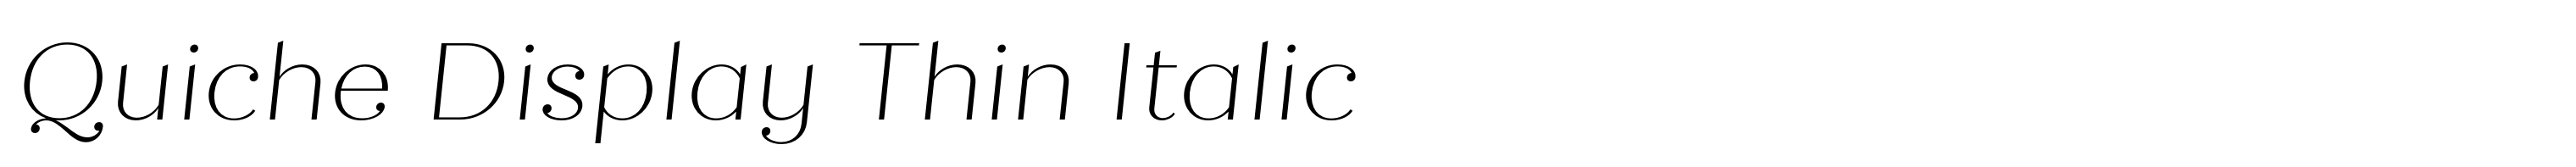 Quiche Display Thin Italic